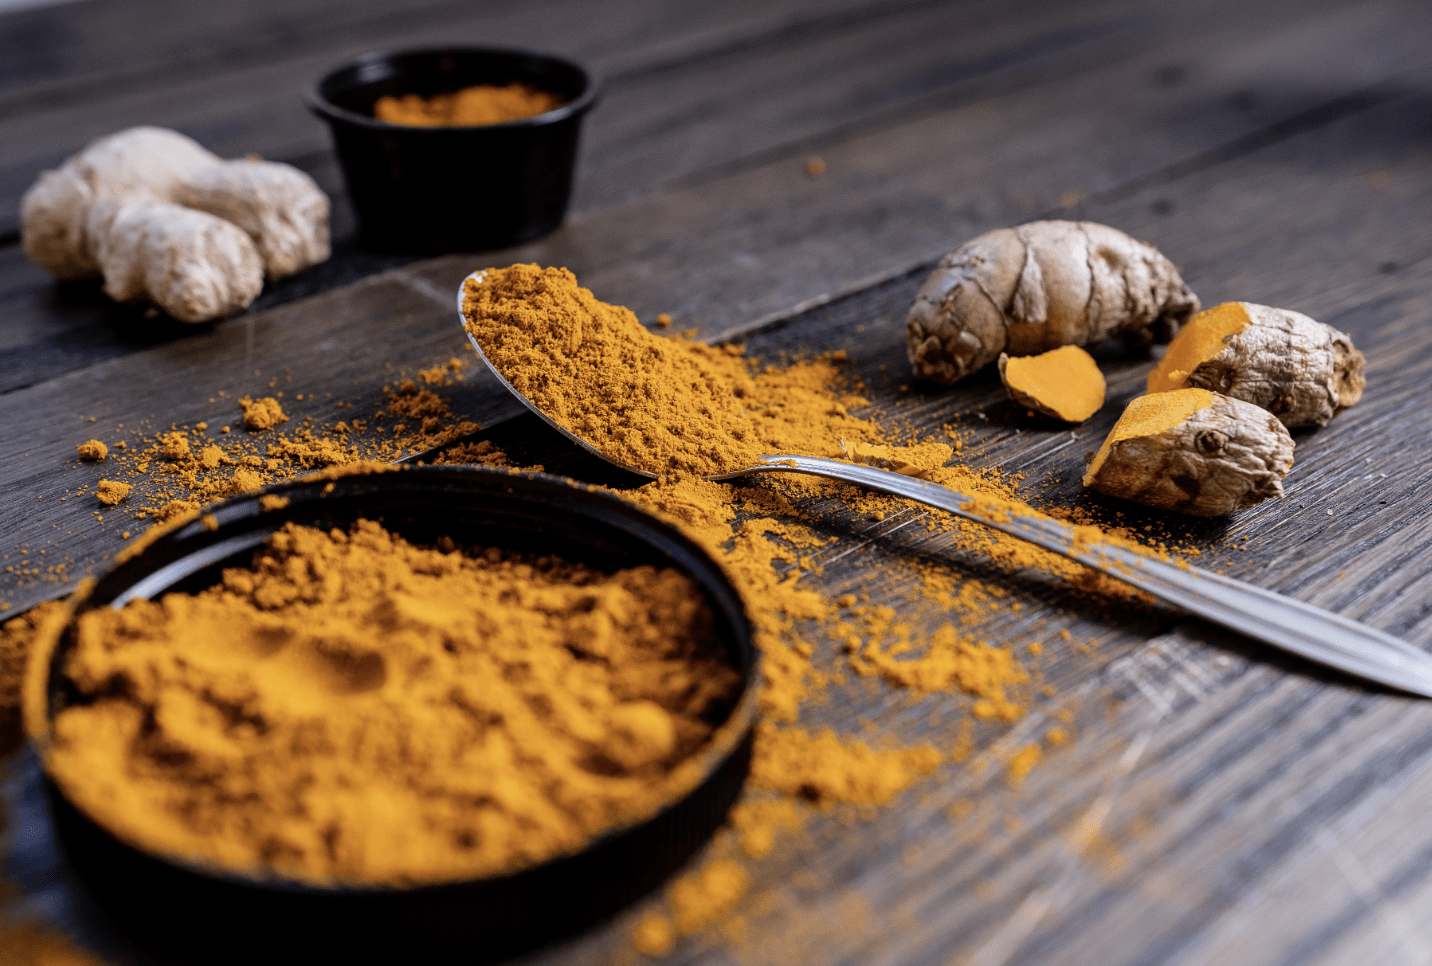 Turmeric powder and root